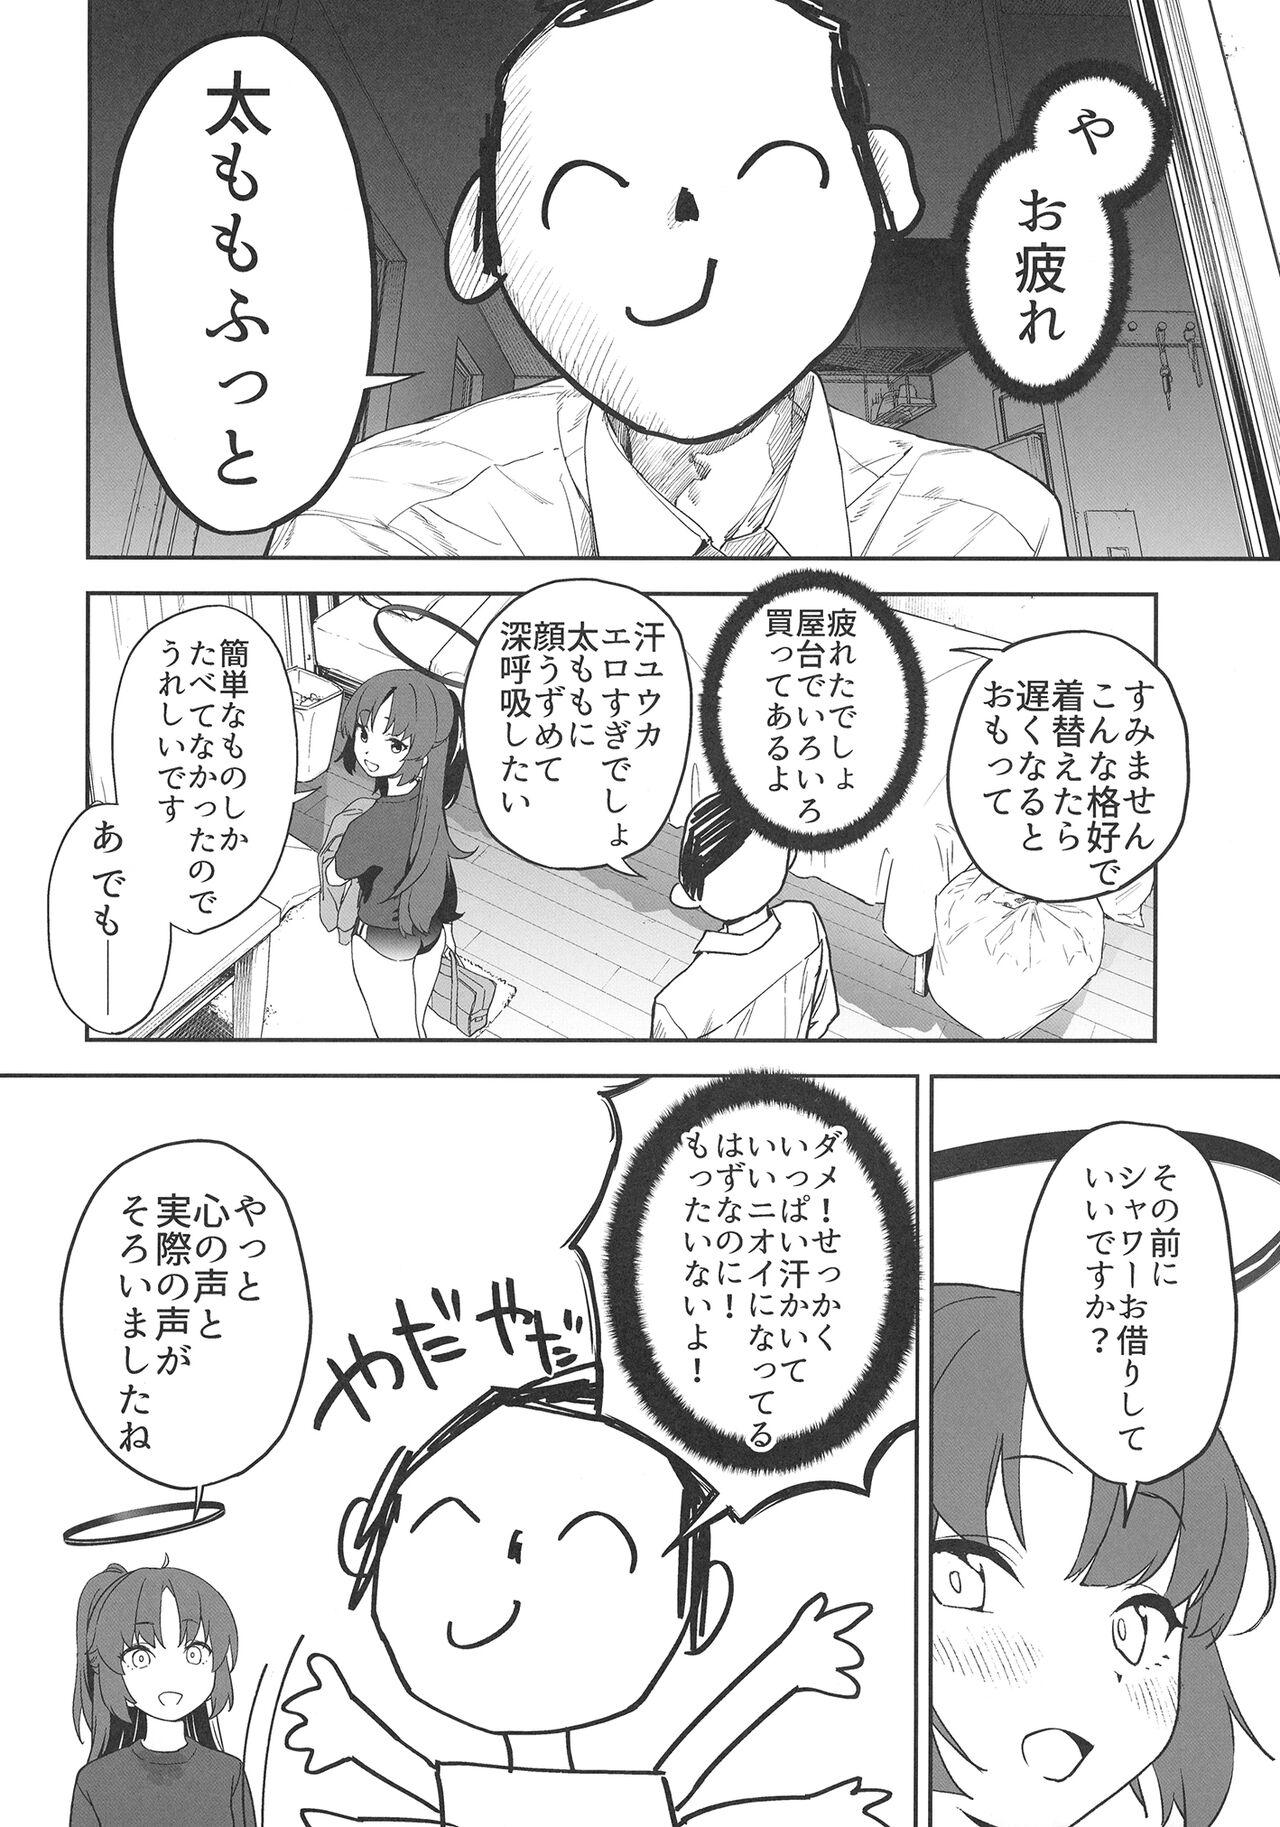 Smooth Shimi Ase Yuuka no Mure Momo Manko - Blue archive Ftvgirls - Page 4